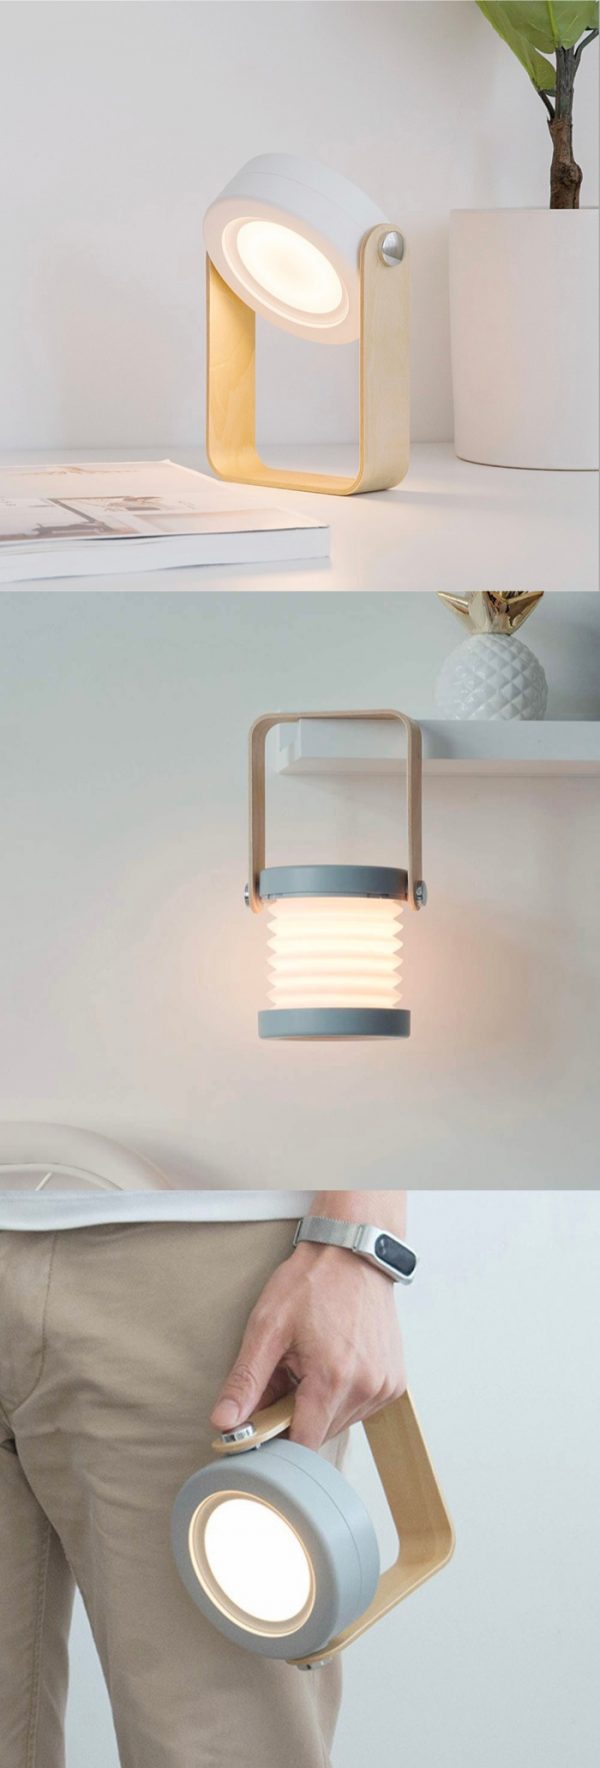 51 LED Desk Lamps For Stylish Everyday Productivity